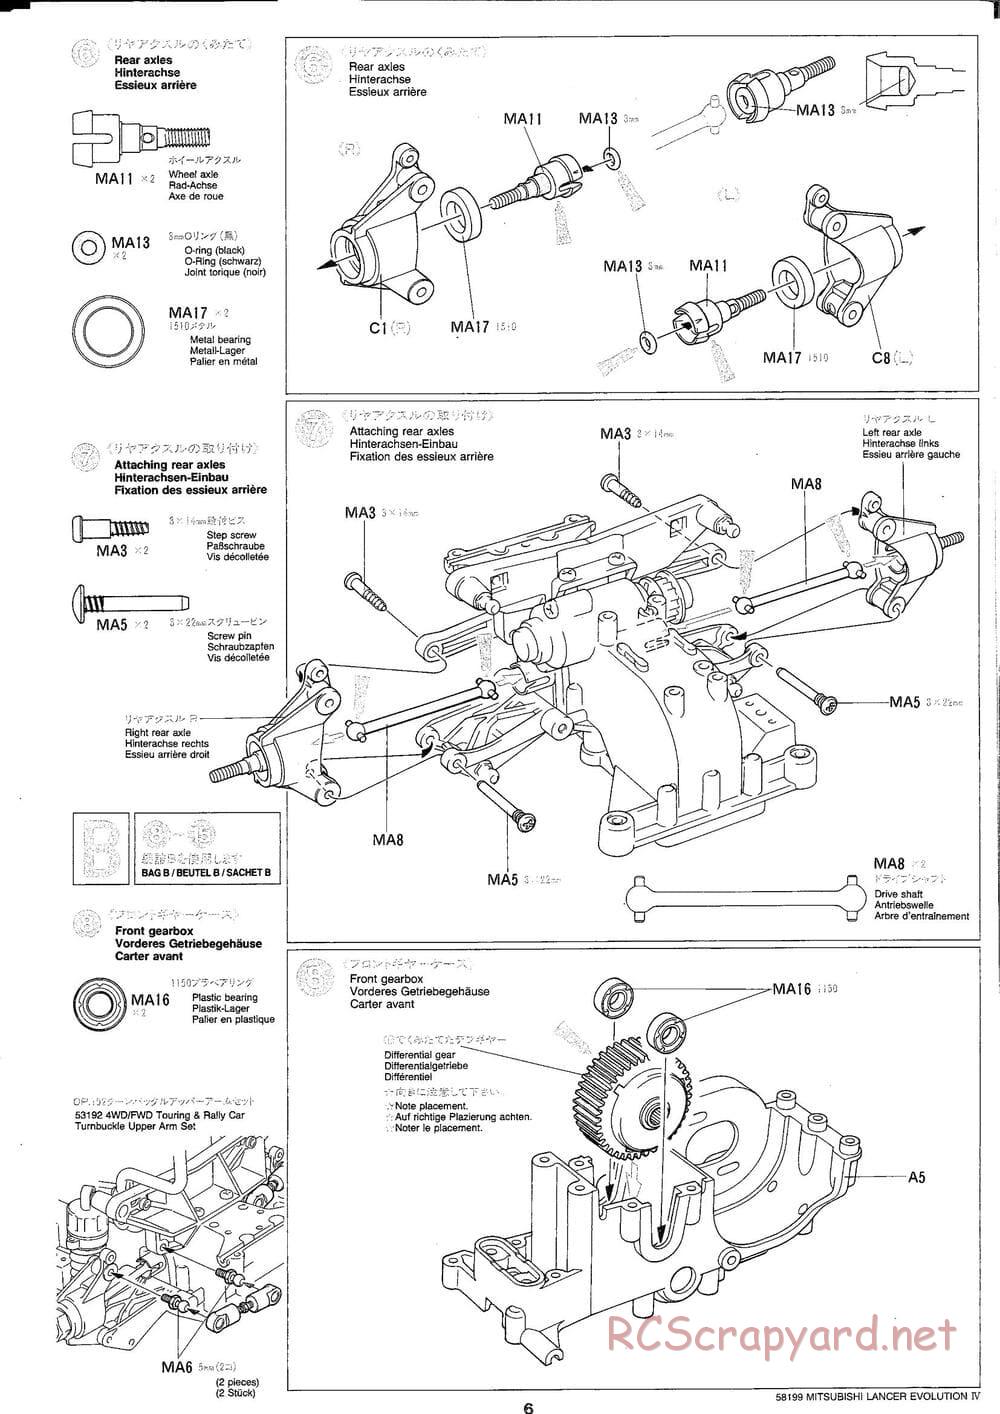 Tamiya - Mitsubishi Lancer Evolution IV - TA-03F Chassis - Manual - Page 6